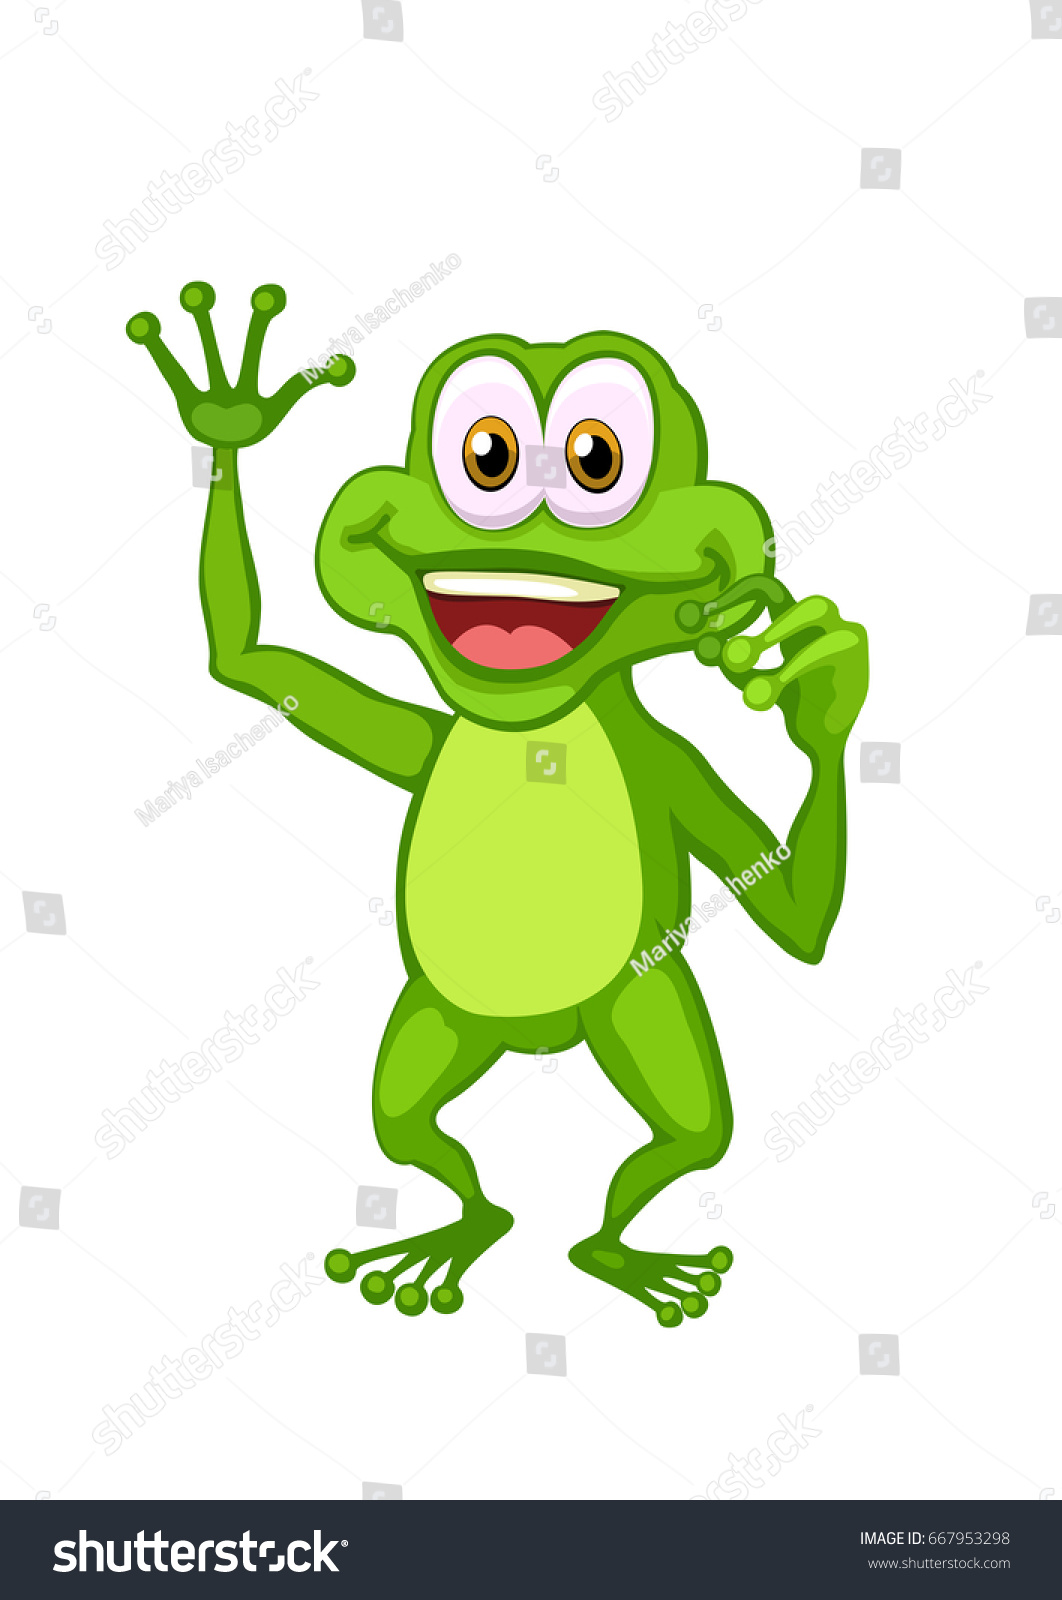 green frog #667953298